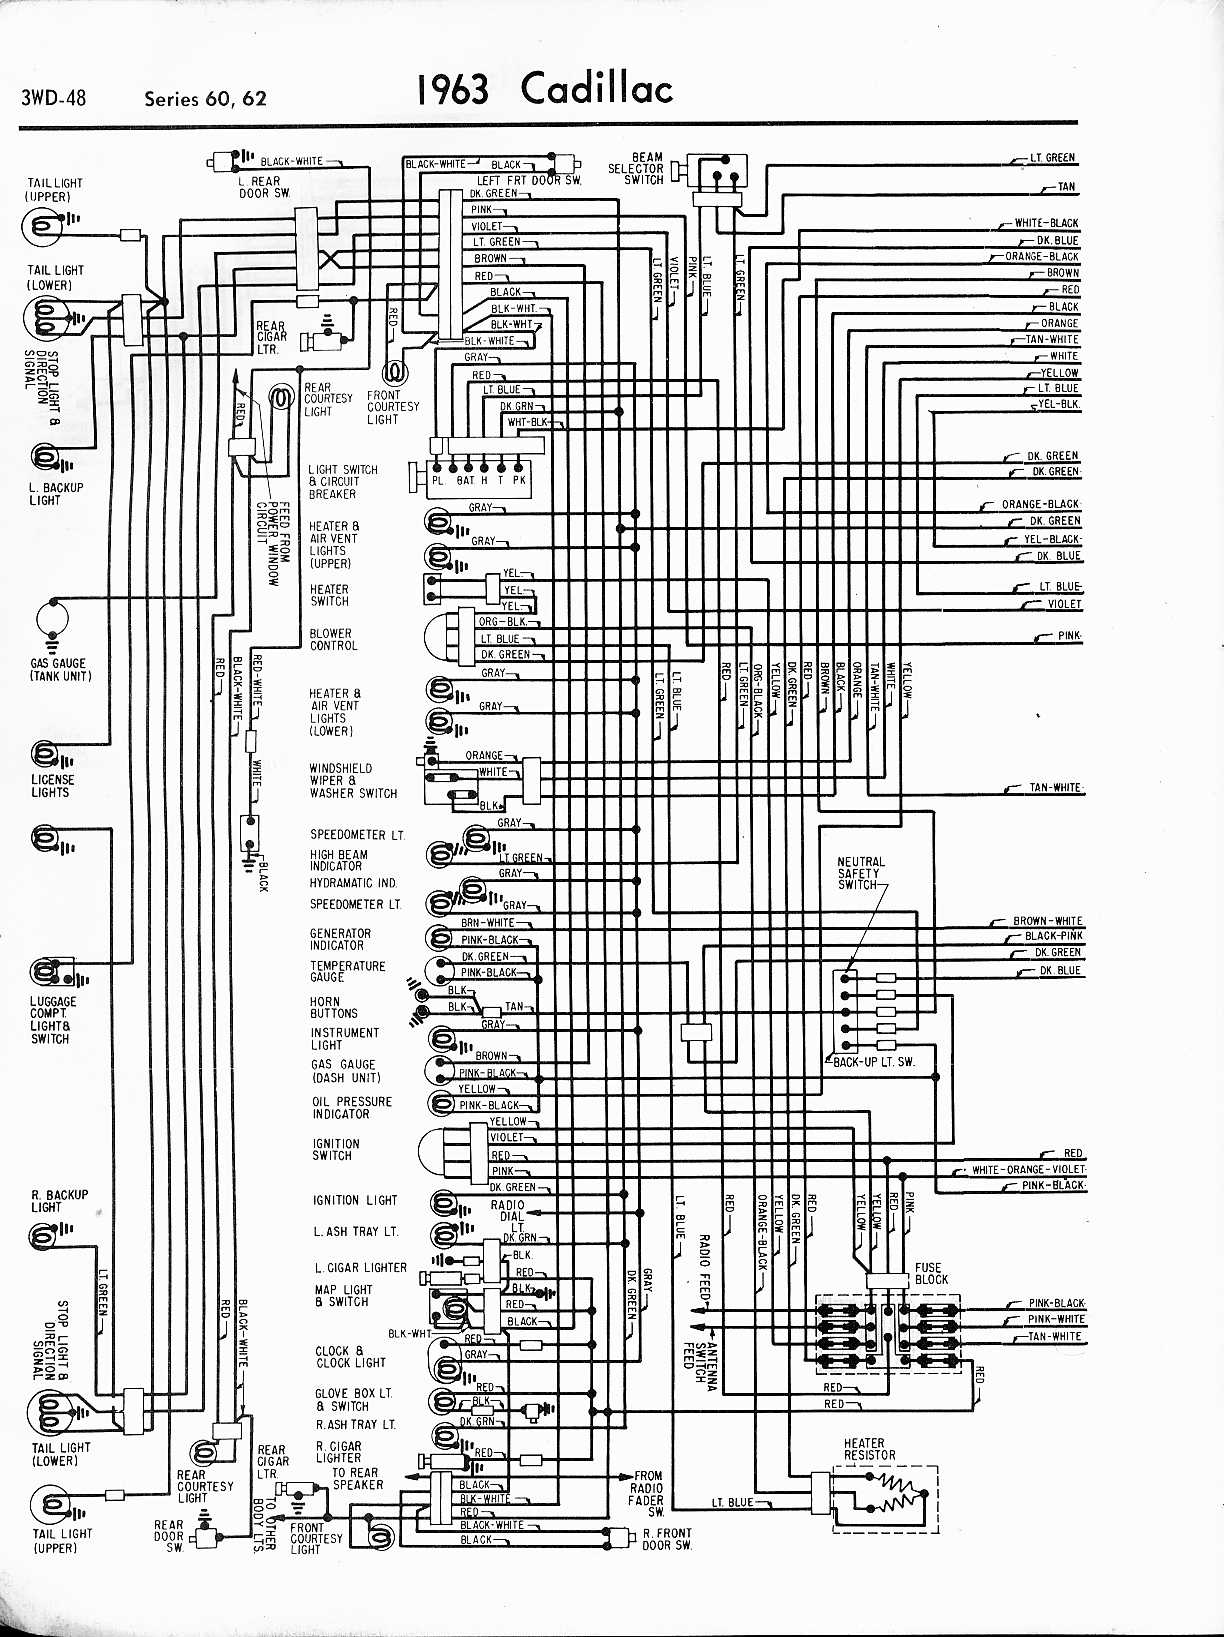 Cadillac Wiring Diagrams: 1957-1965 wiring diagram 1960 